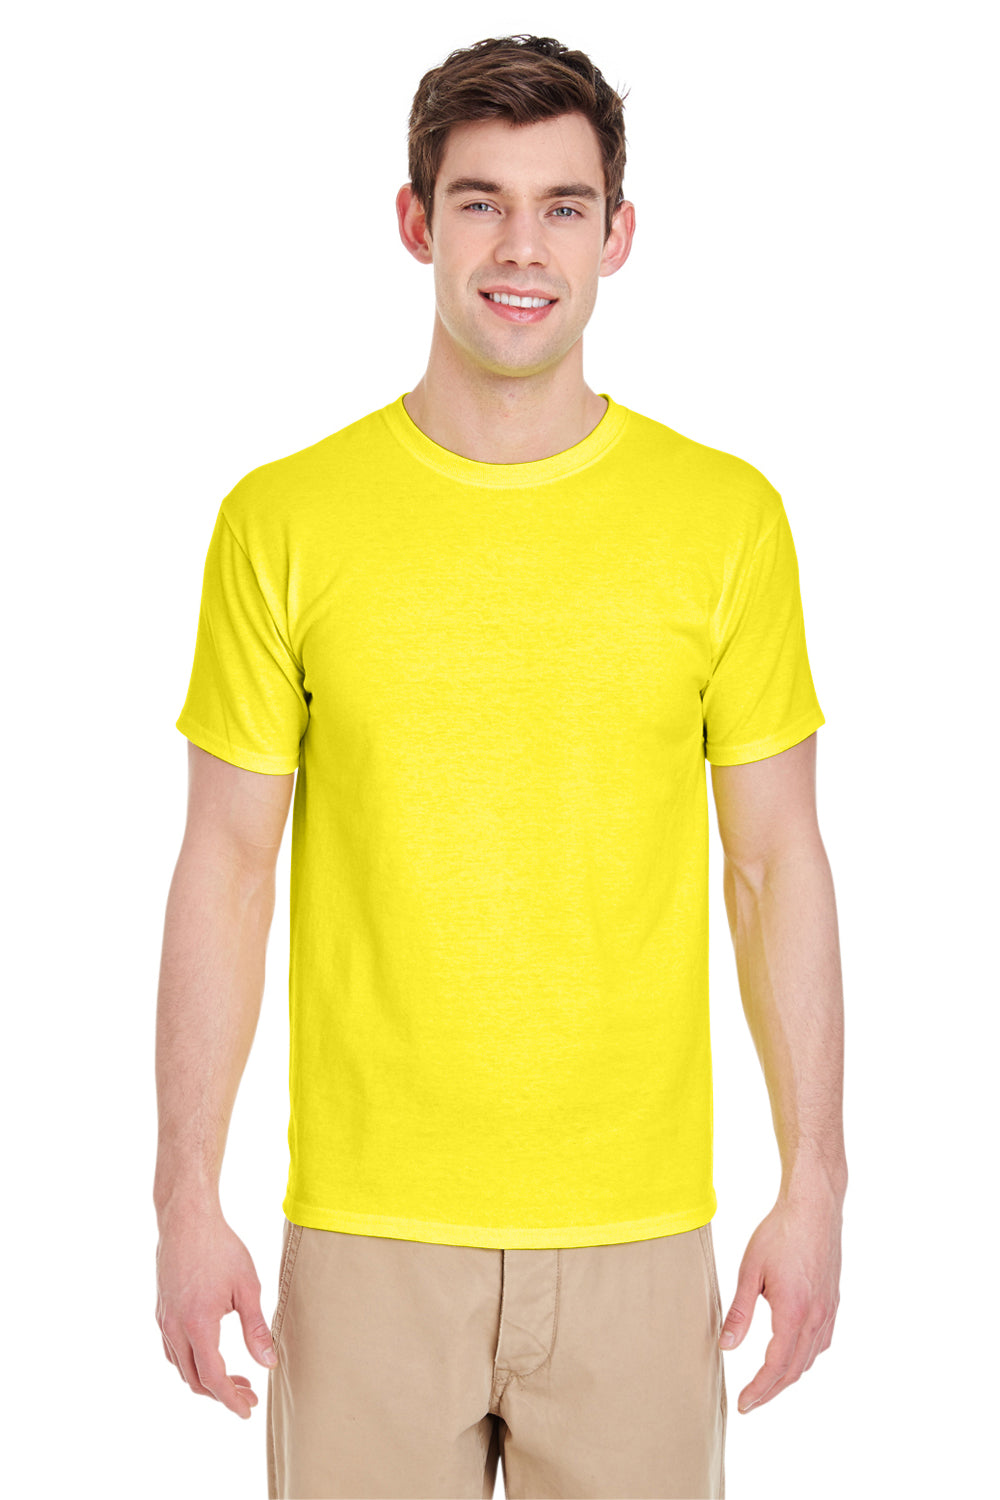 Jerzees 29M Mens Dri-Power Moisture Wicking Short Sleeve Crewneck T-Shirt Neon Yellow Front